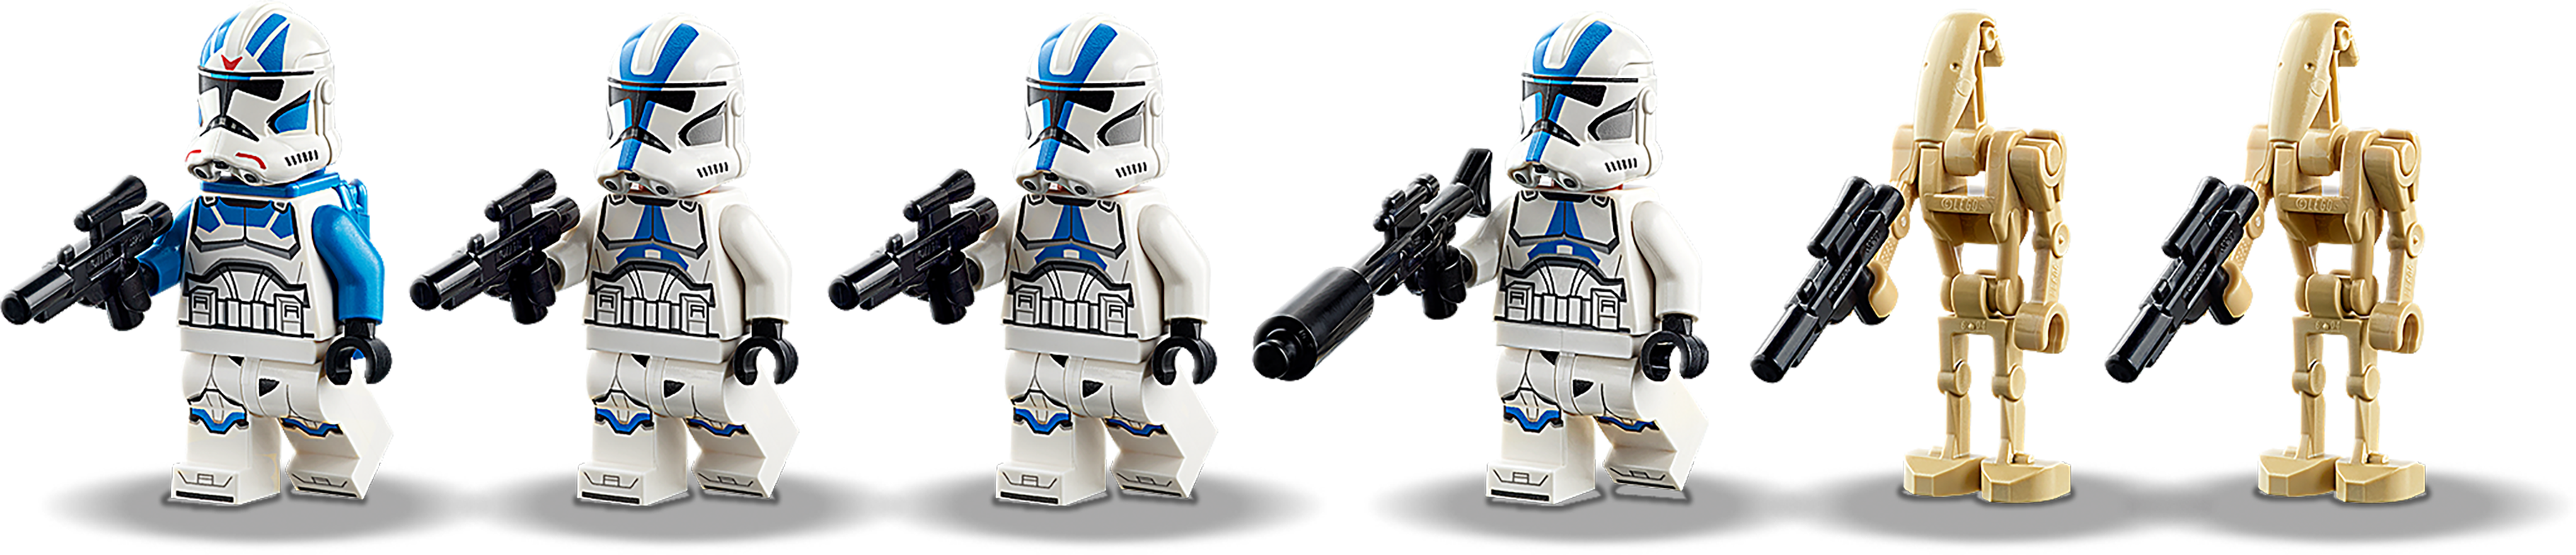 Building Toys Minifigures Toys & Hobbies NEW! 5+ LEGO 75280 Star Wars 501st Legion Clone Trooper 